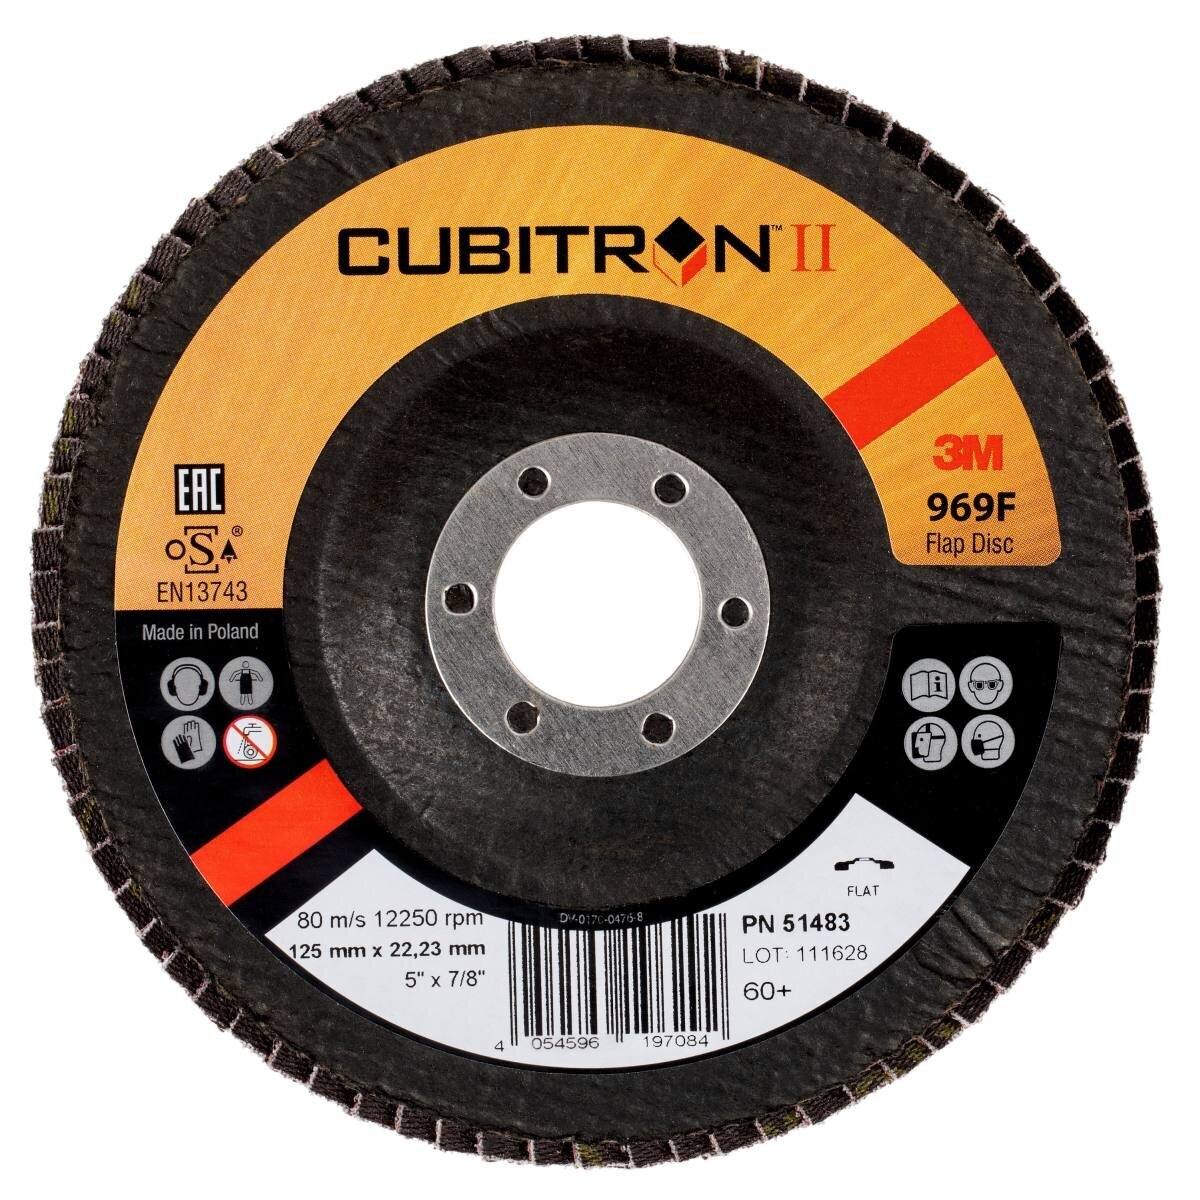 3M 969F Cubitron II discos de láminas d=125mm P60+ #51483 plano